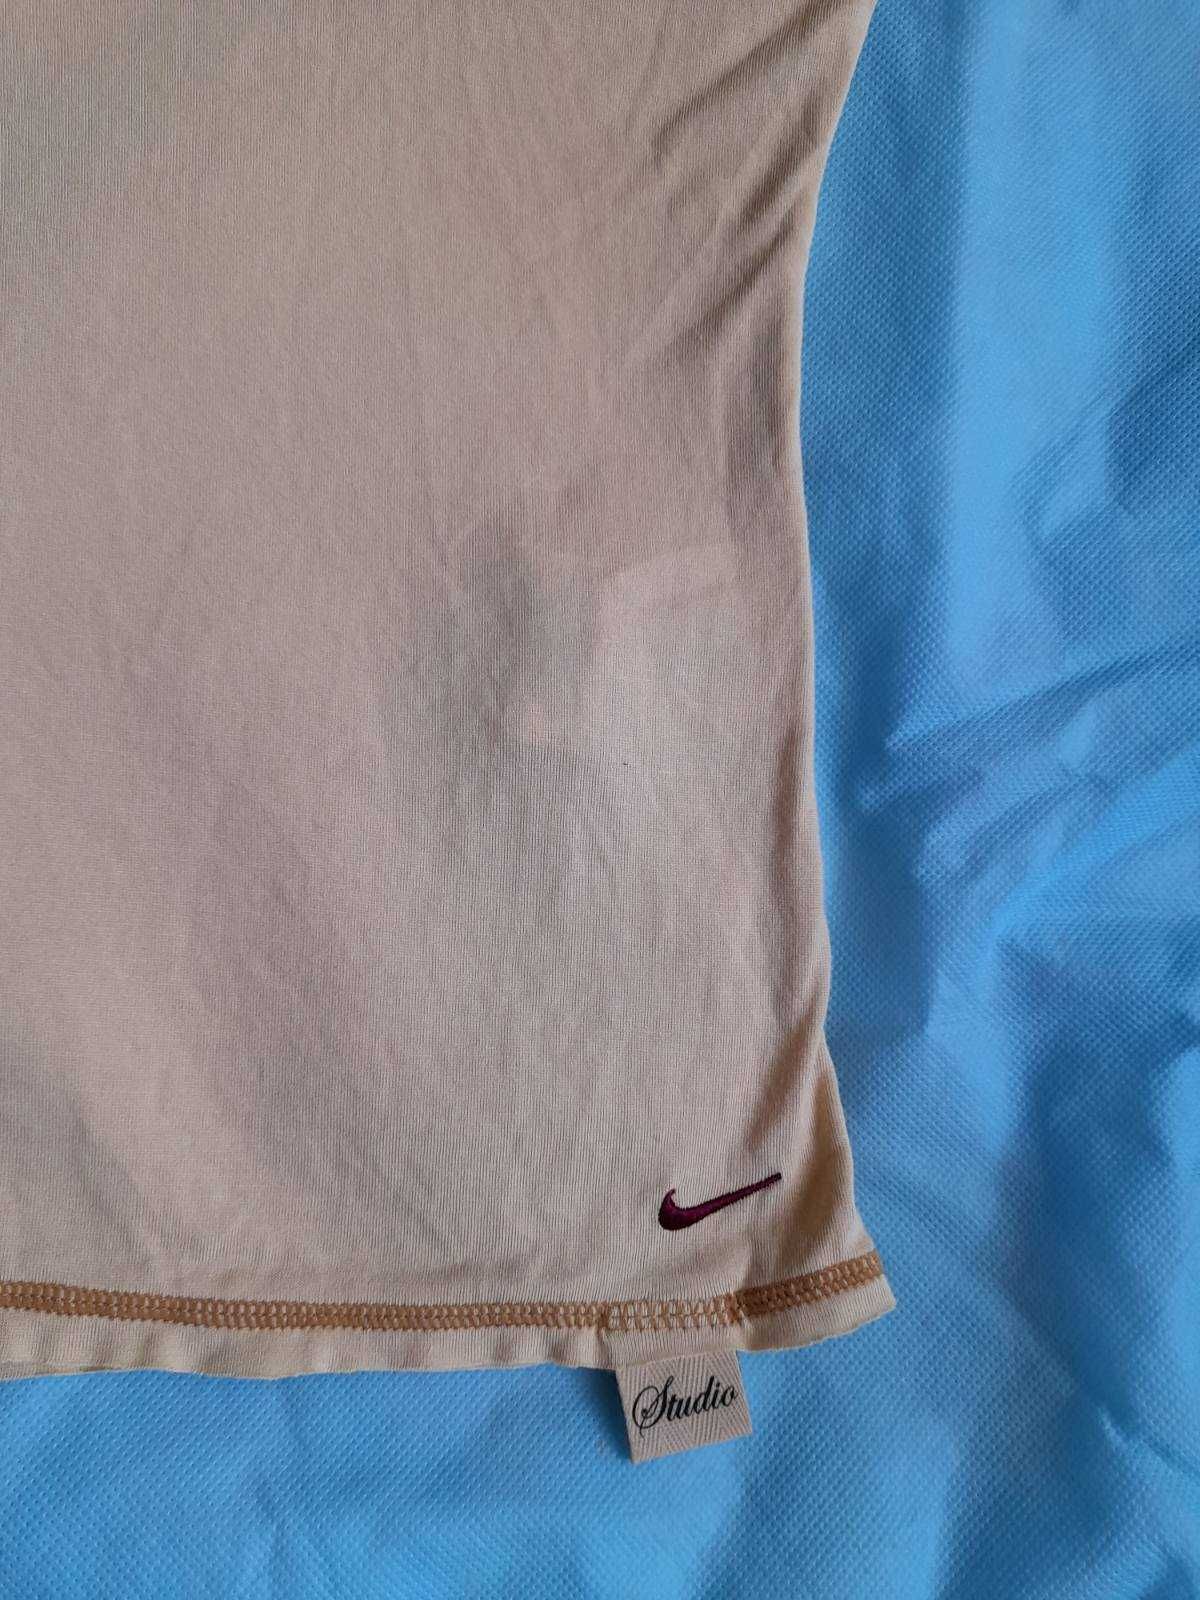 Женская футболка топ Nike размер S, M 44 46